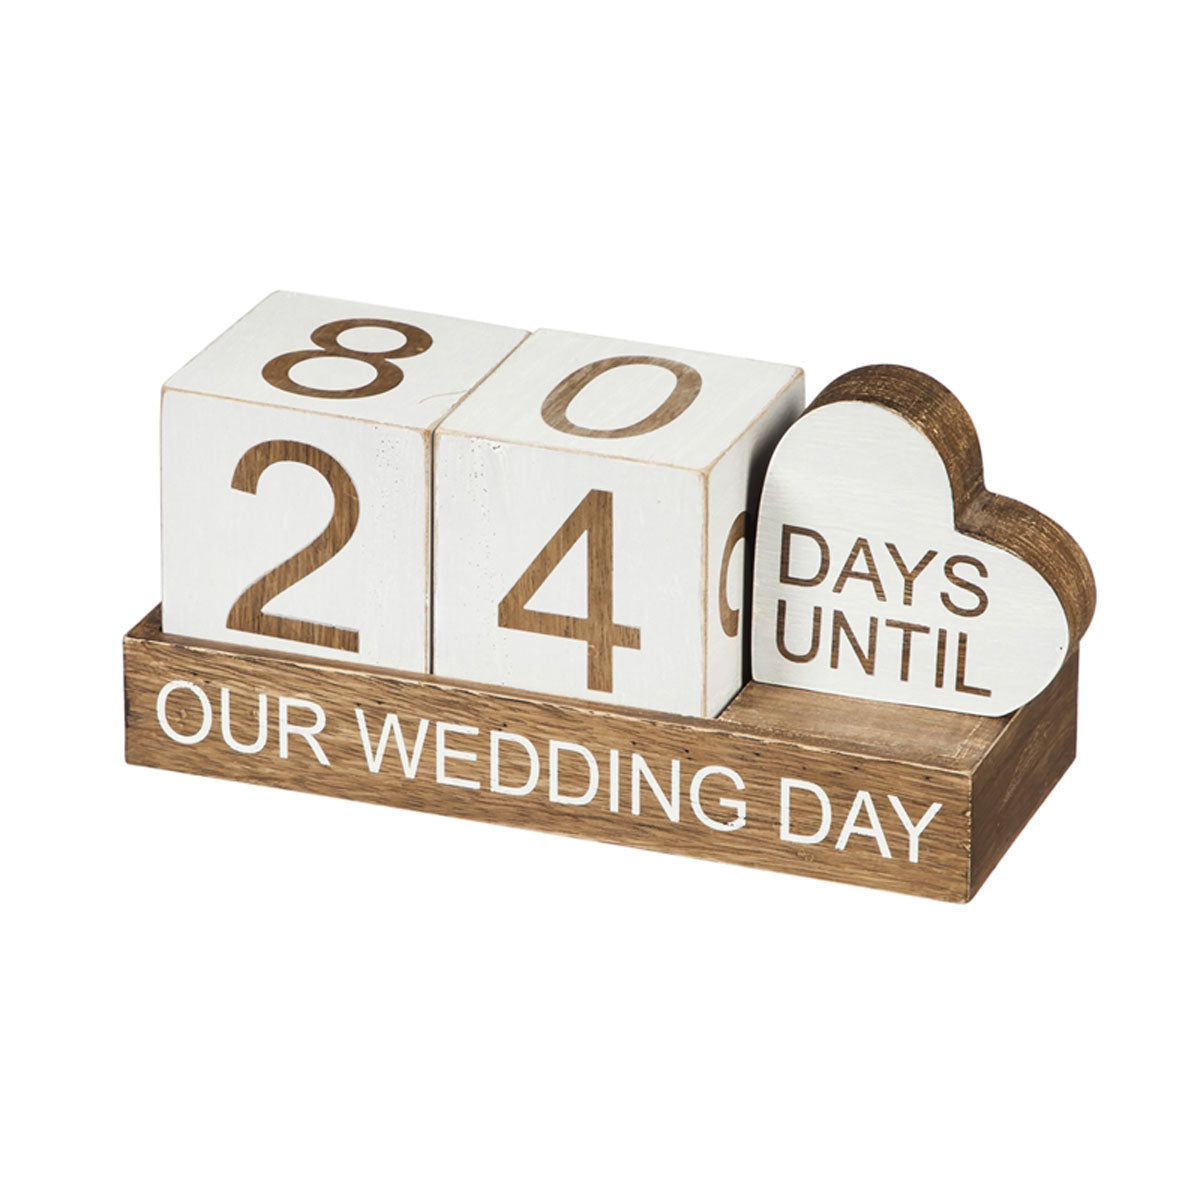 Our wedding day countdown calendar